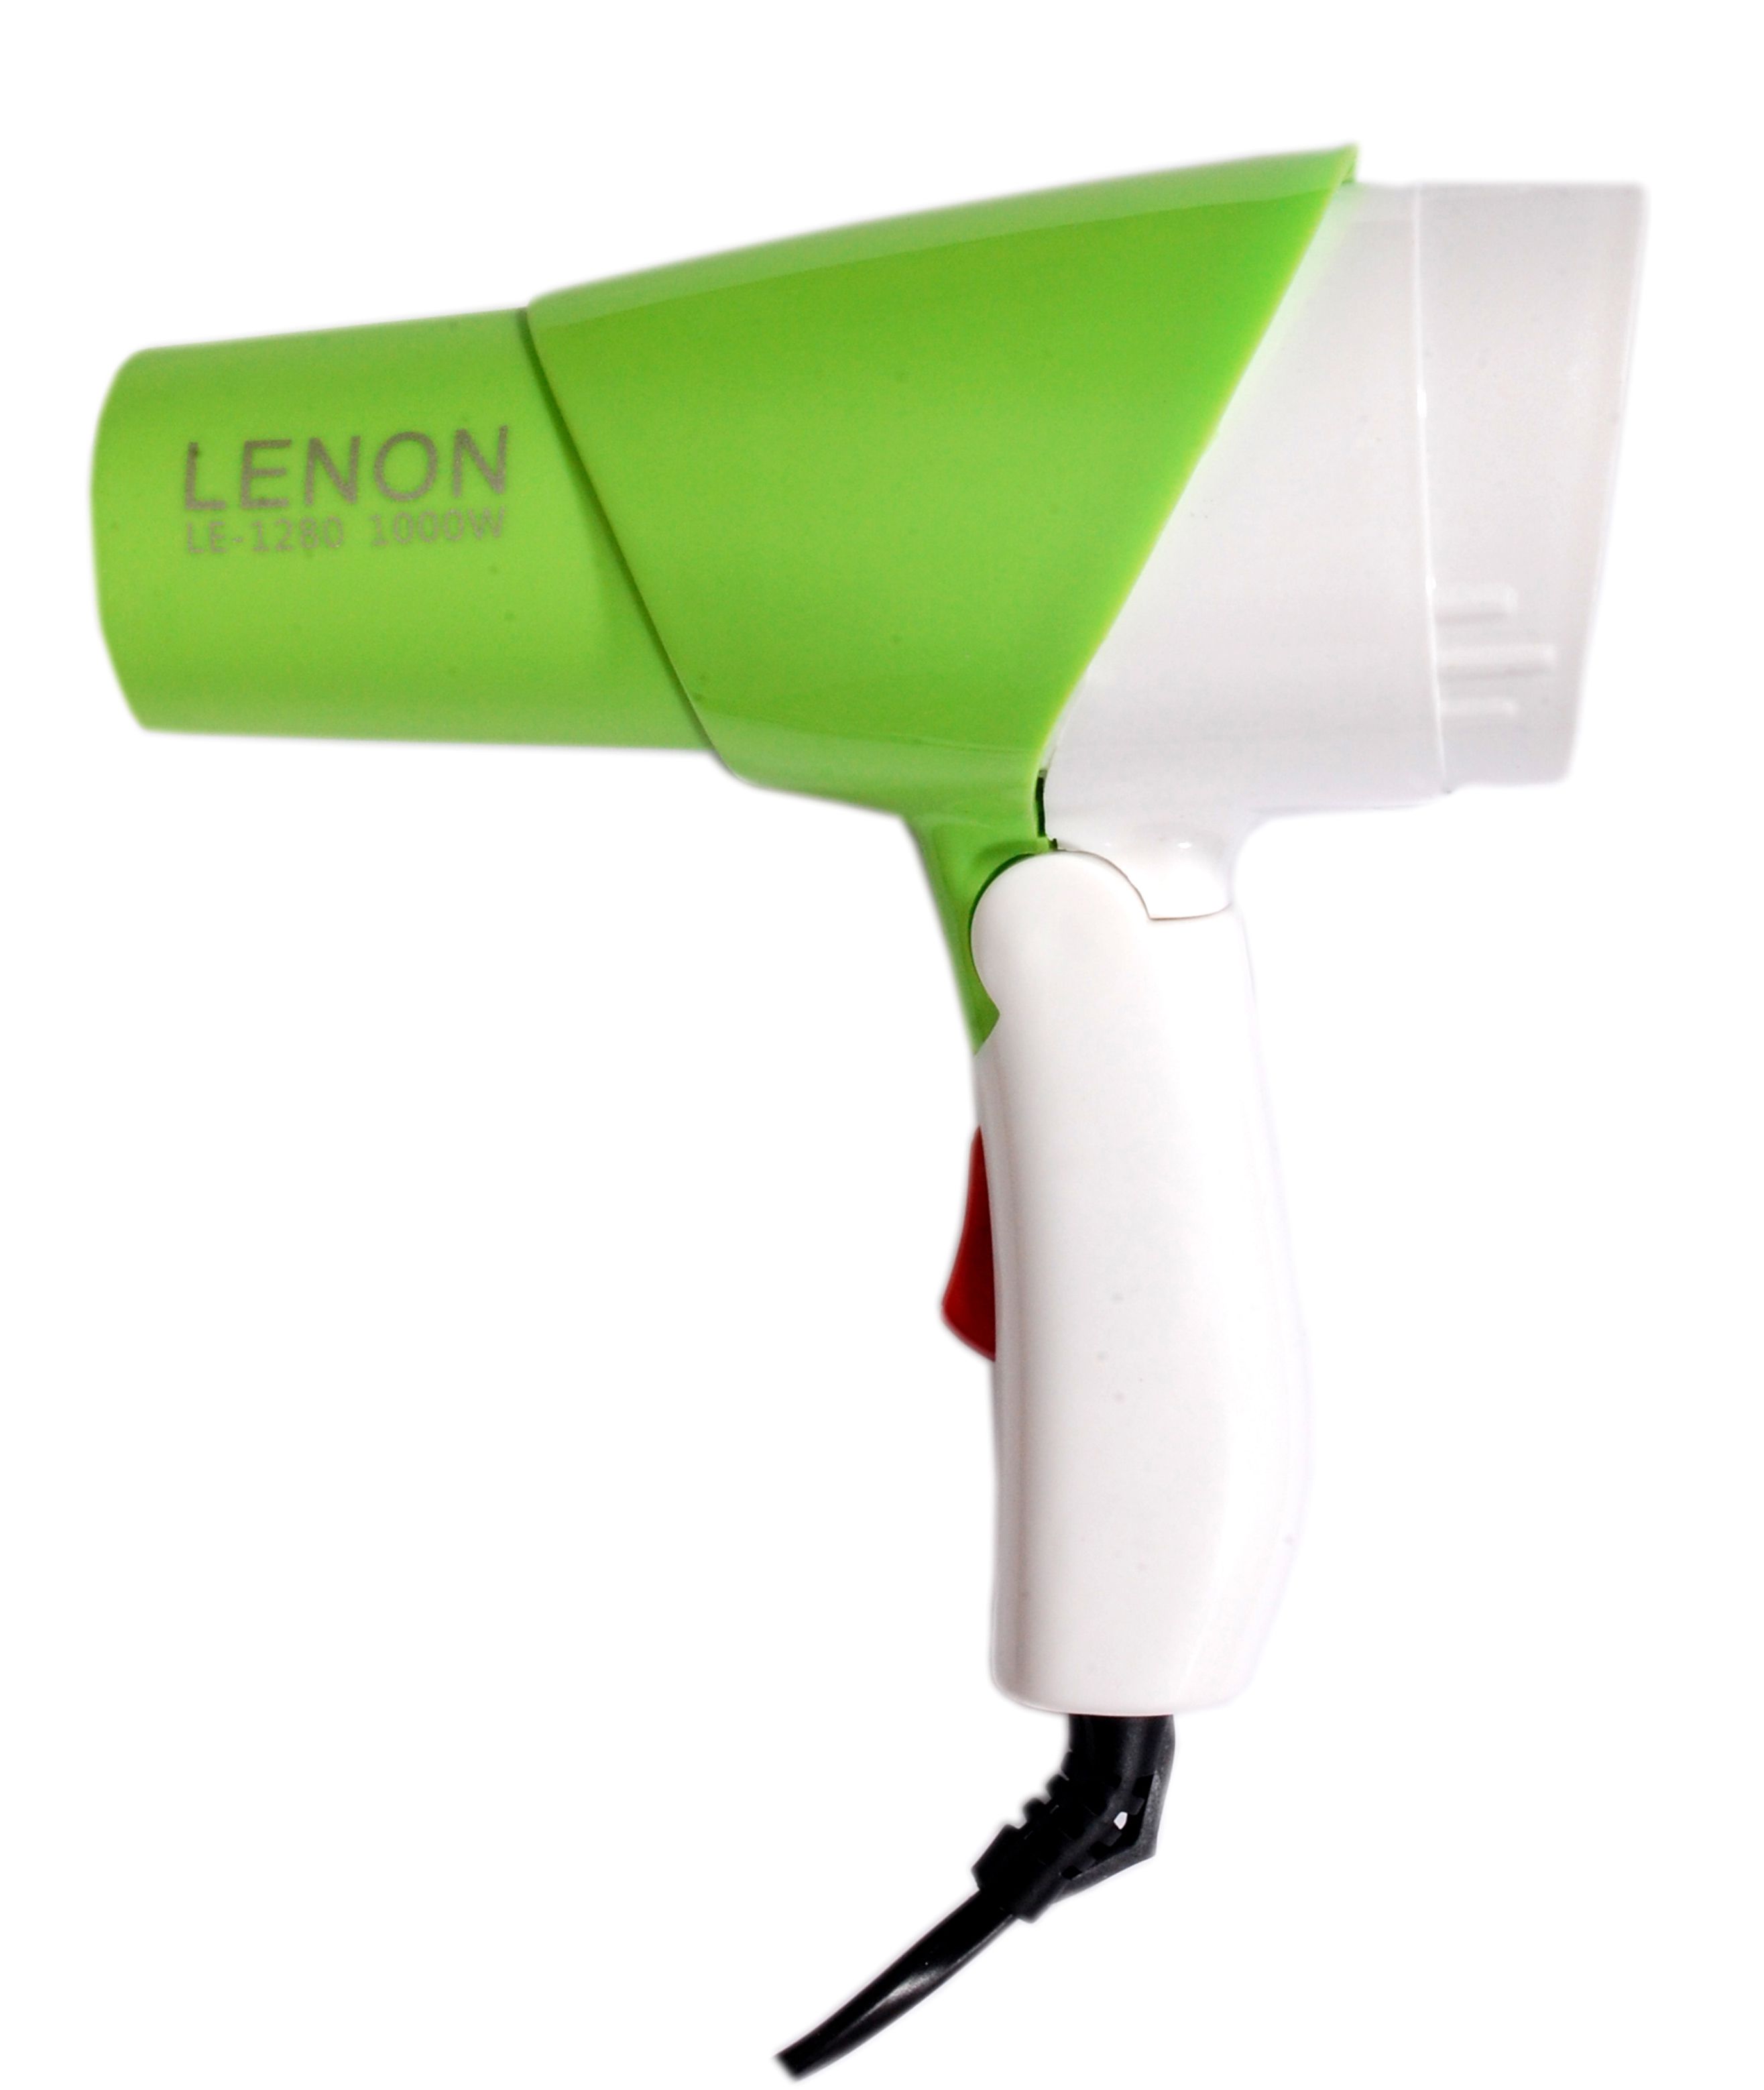     			Lenon Professional LE-1280 Hair Dryer ( 1000 Watt, Green )